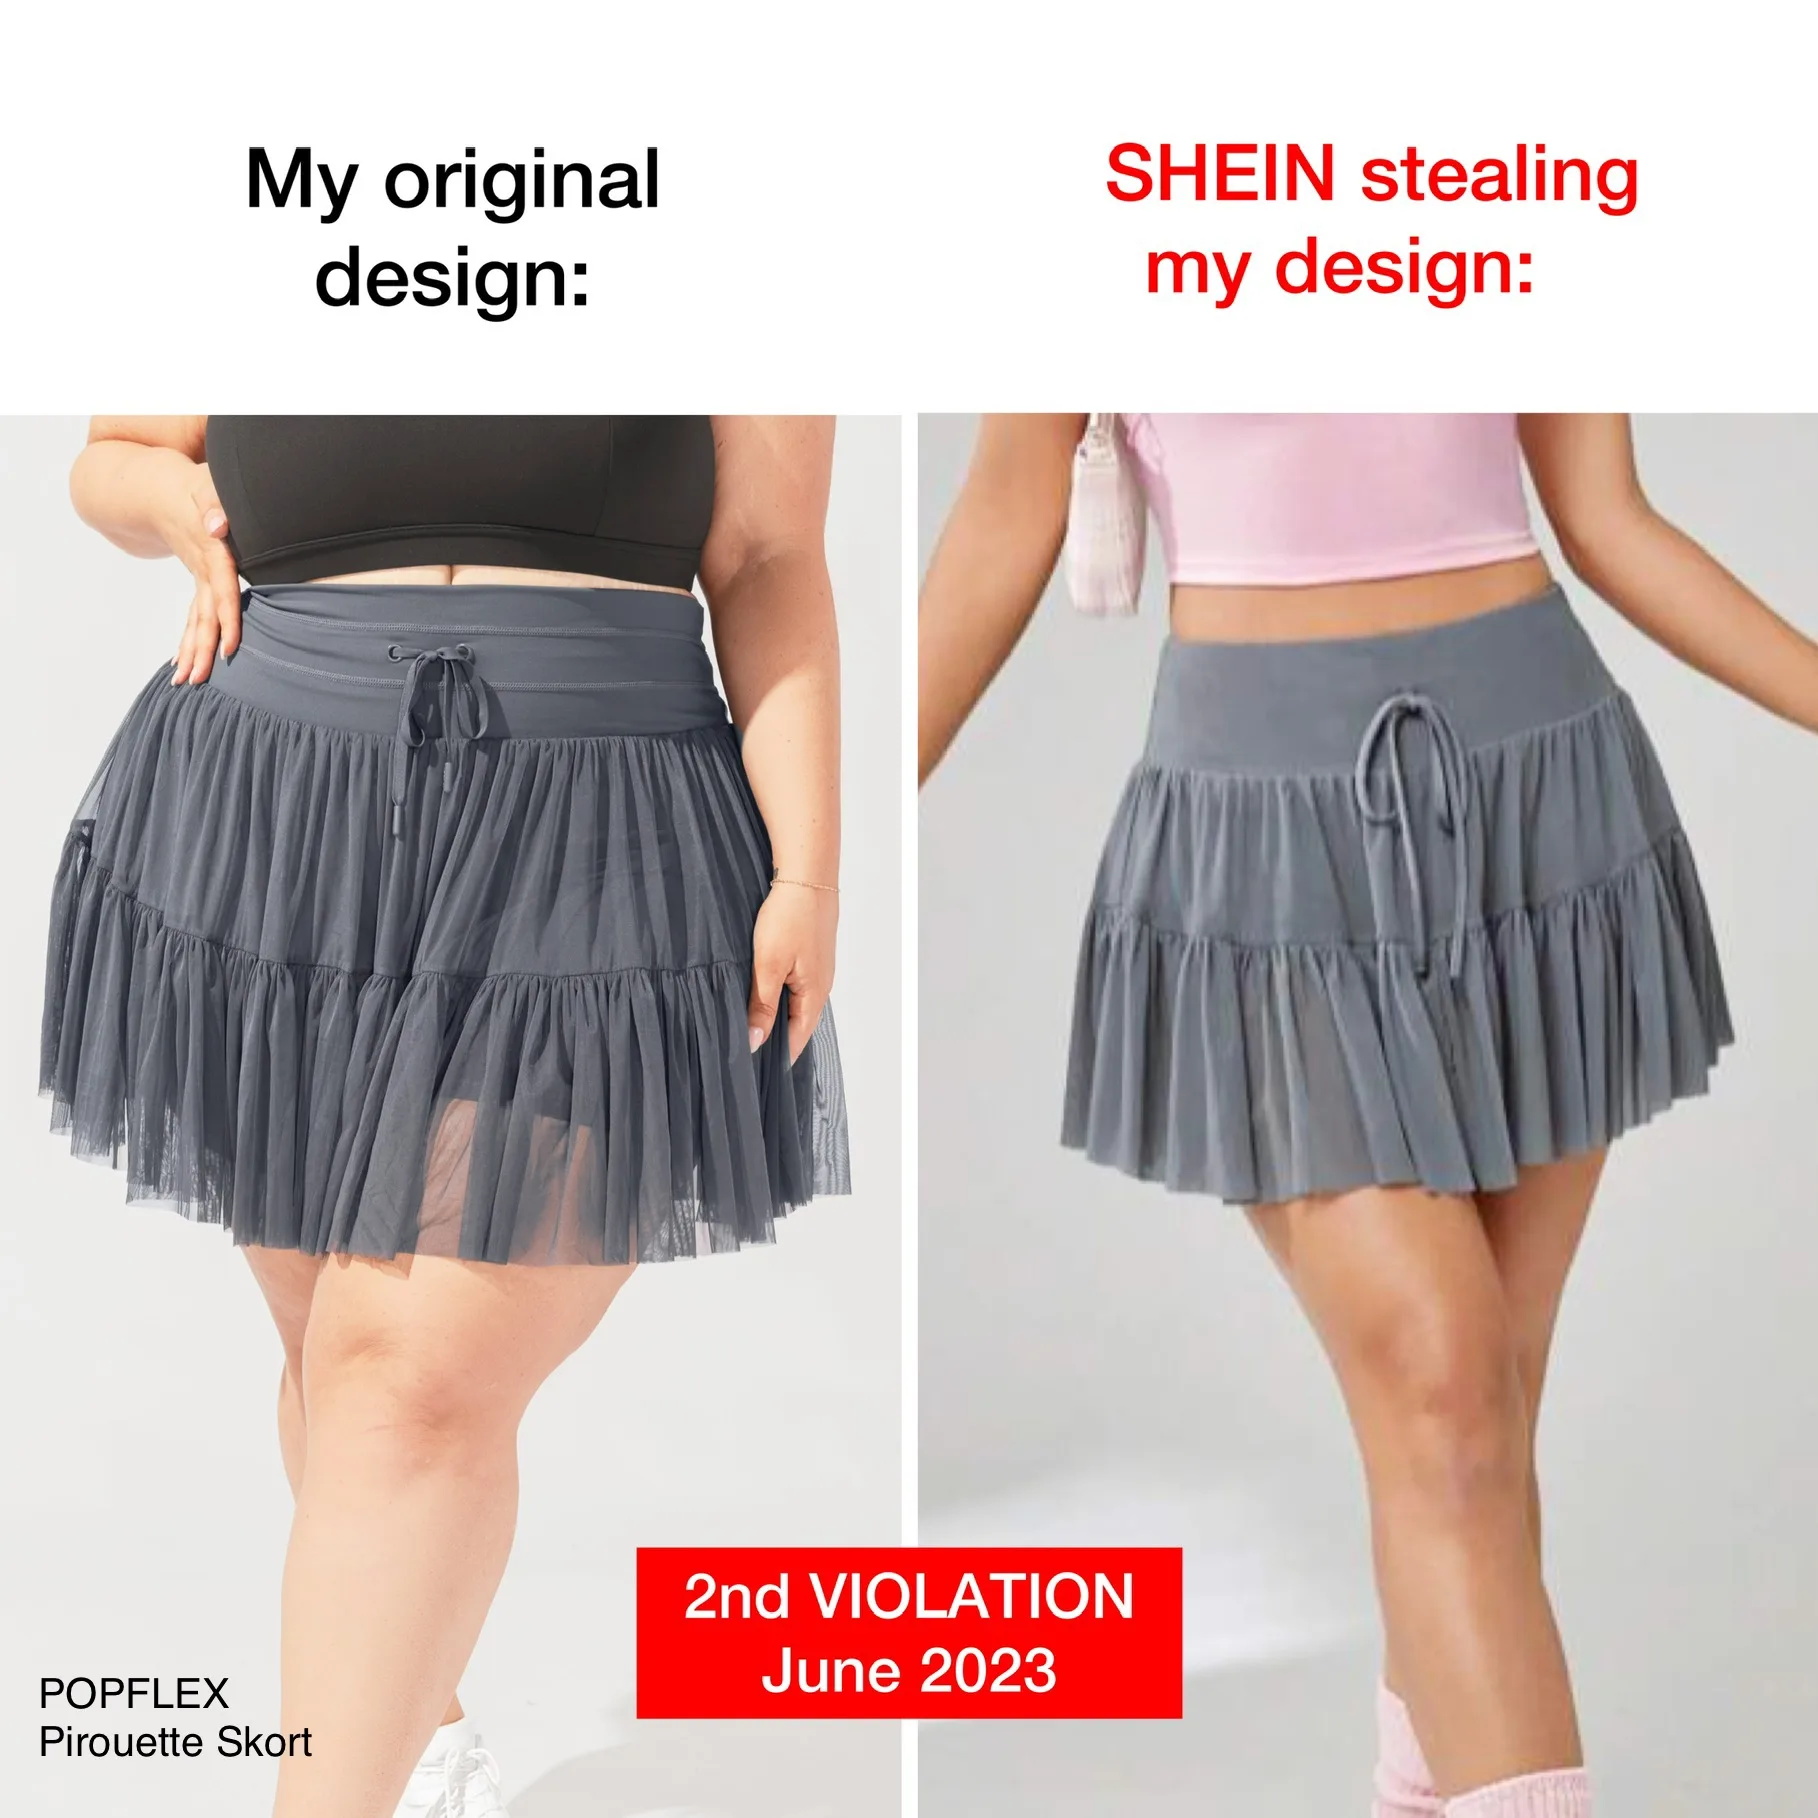 side by side comparison of popflex original pirouette skirt design and shein stealing design from popflex. 